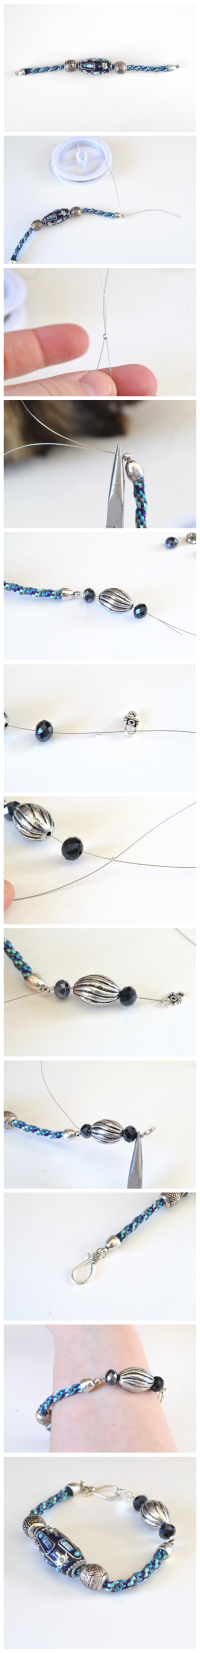 DIY Bracelet Using a Too Short Kumihimo Braid